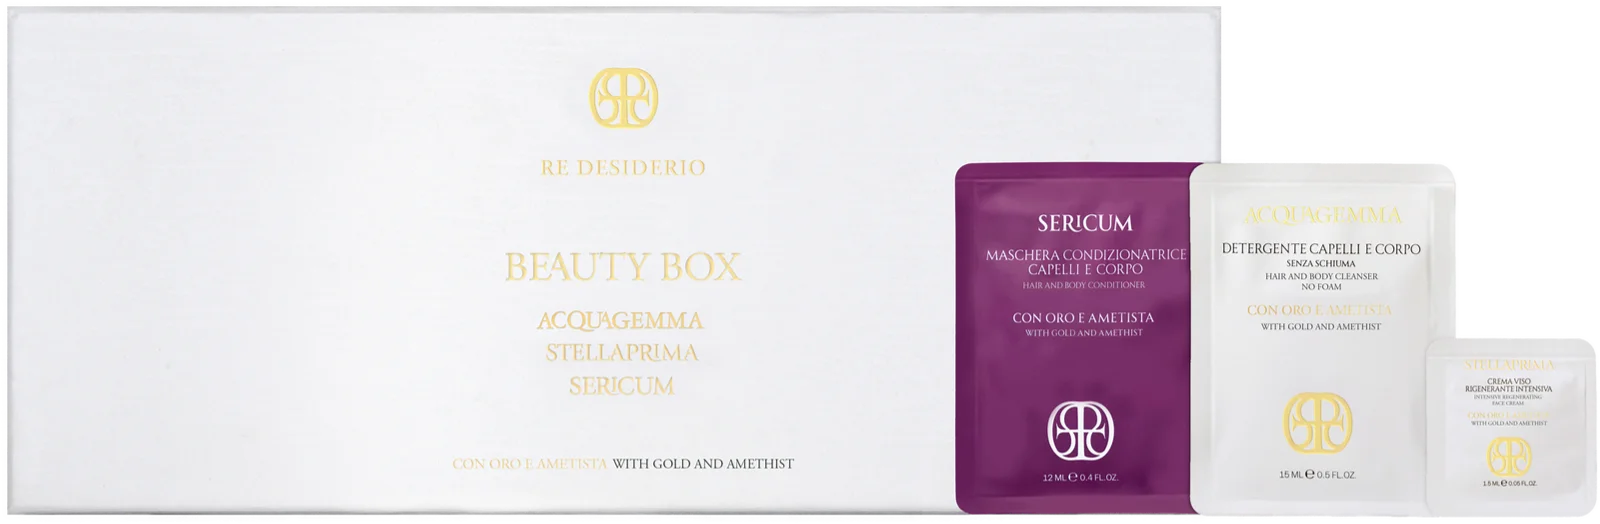 Marygrace Acquagemma + Sericum + Stellaprima Beauty Box